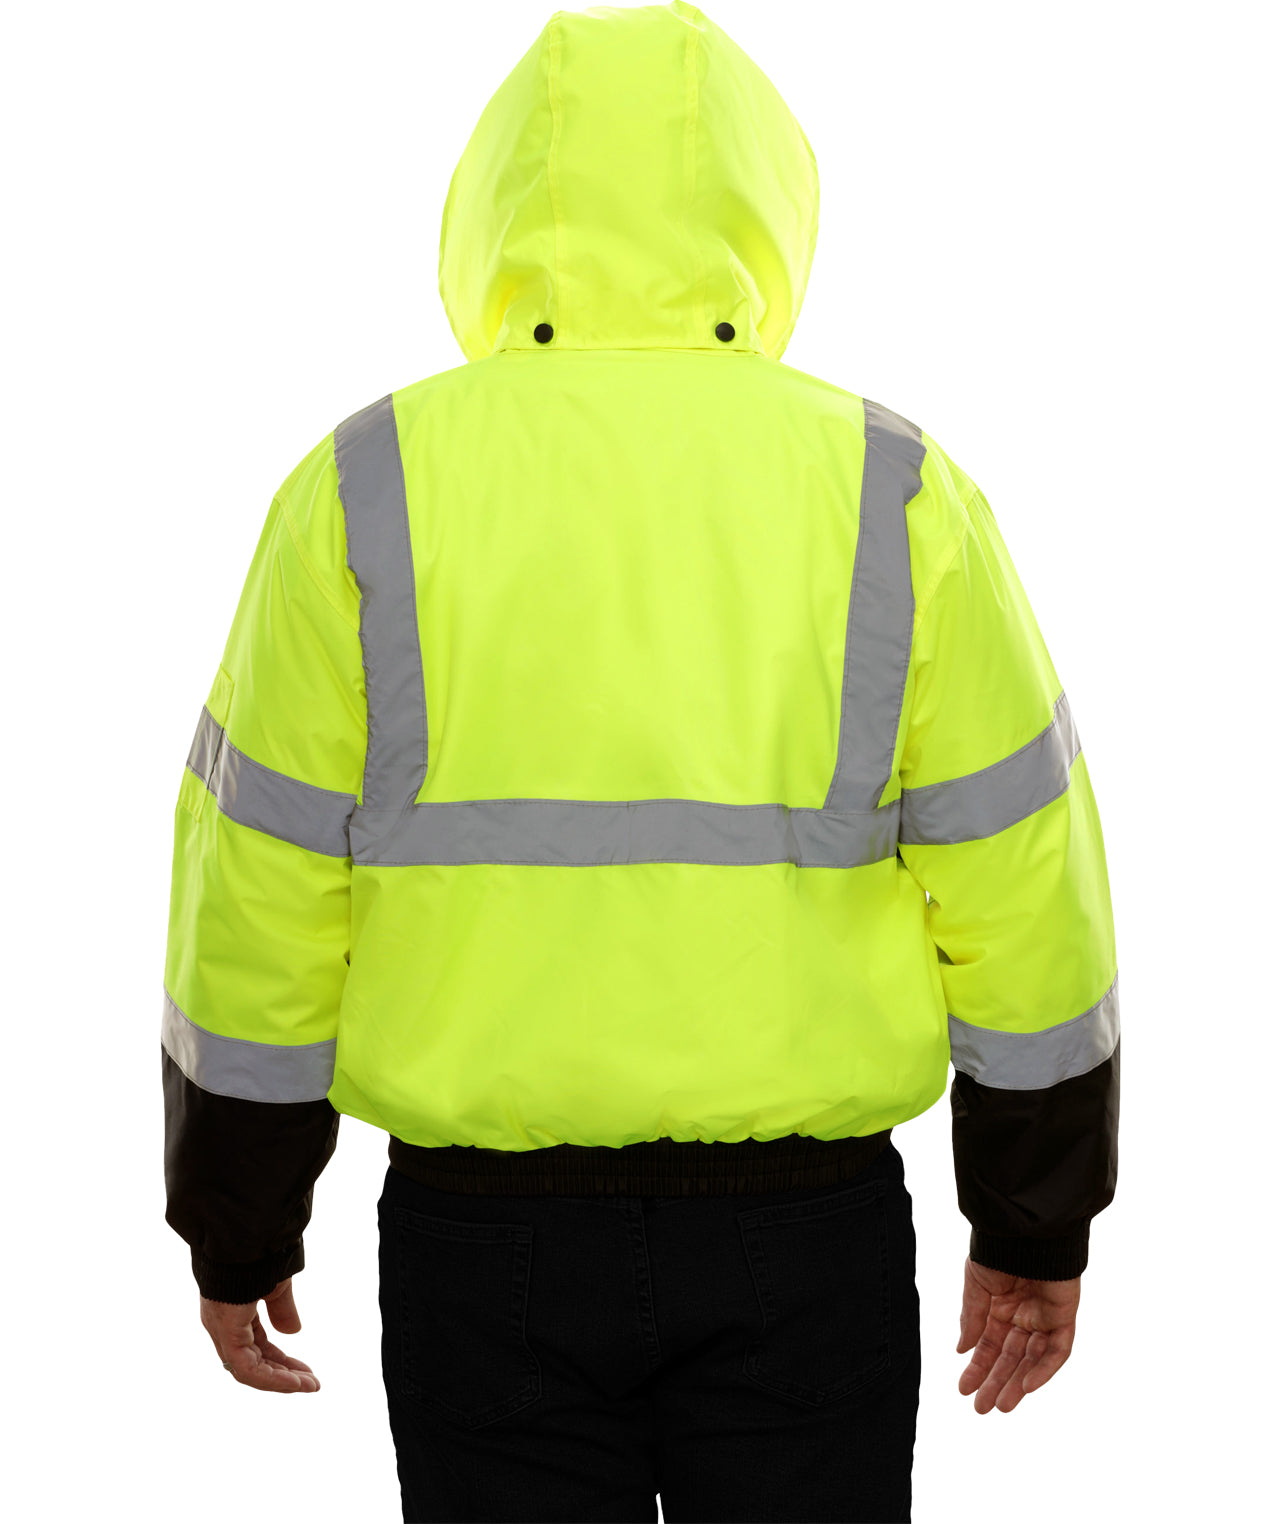 413GTLB Safety Jacket: Hi-Vis Bomber: Adjustable Hood: Waterproof